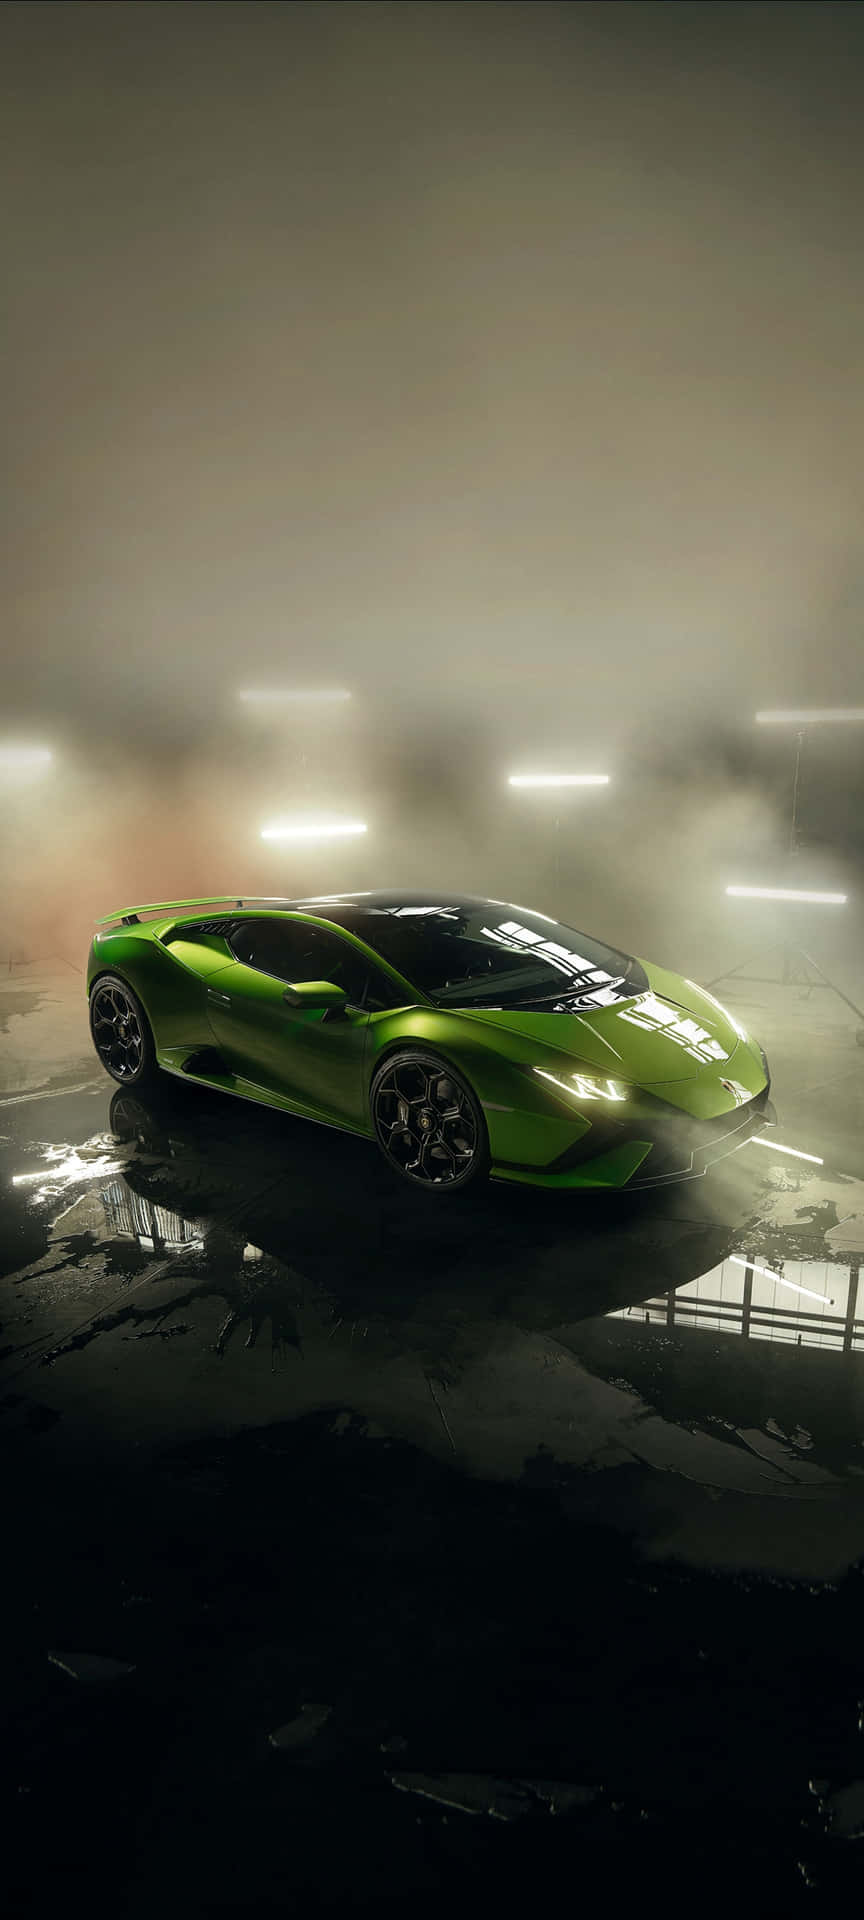 "Luxury Meets Technology: Introducing the Pixel 3 XL Lamborghini Edition"